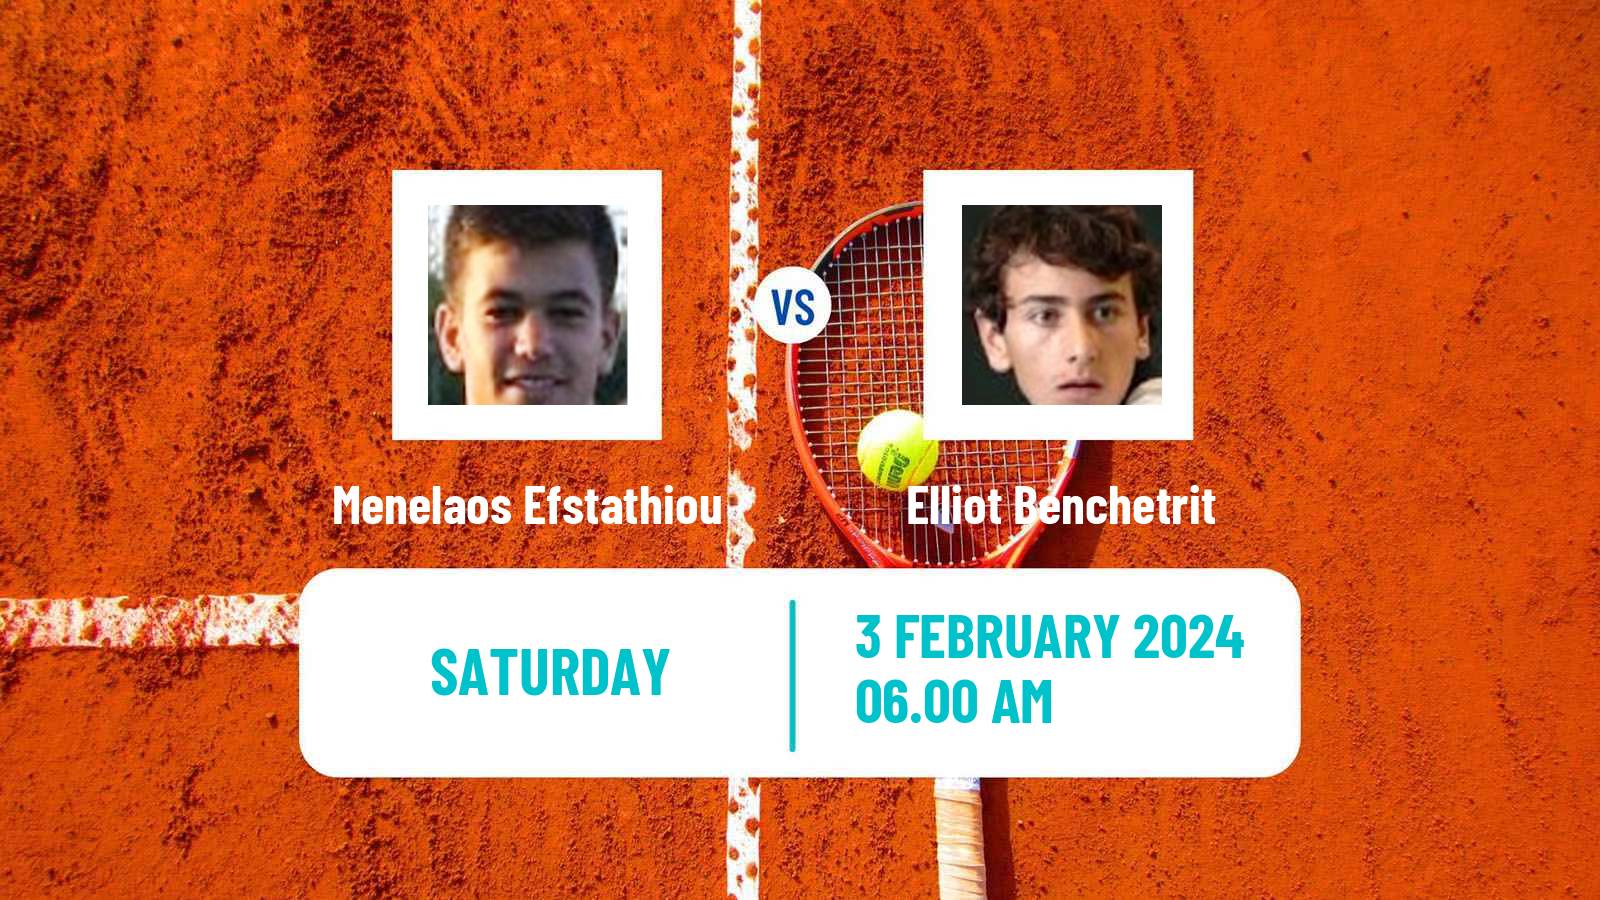 Tennis Davis Cup World Group II Menelaos Efstathiou - Elliot Benchetrit